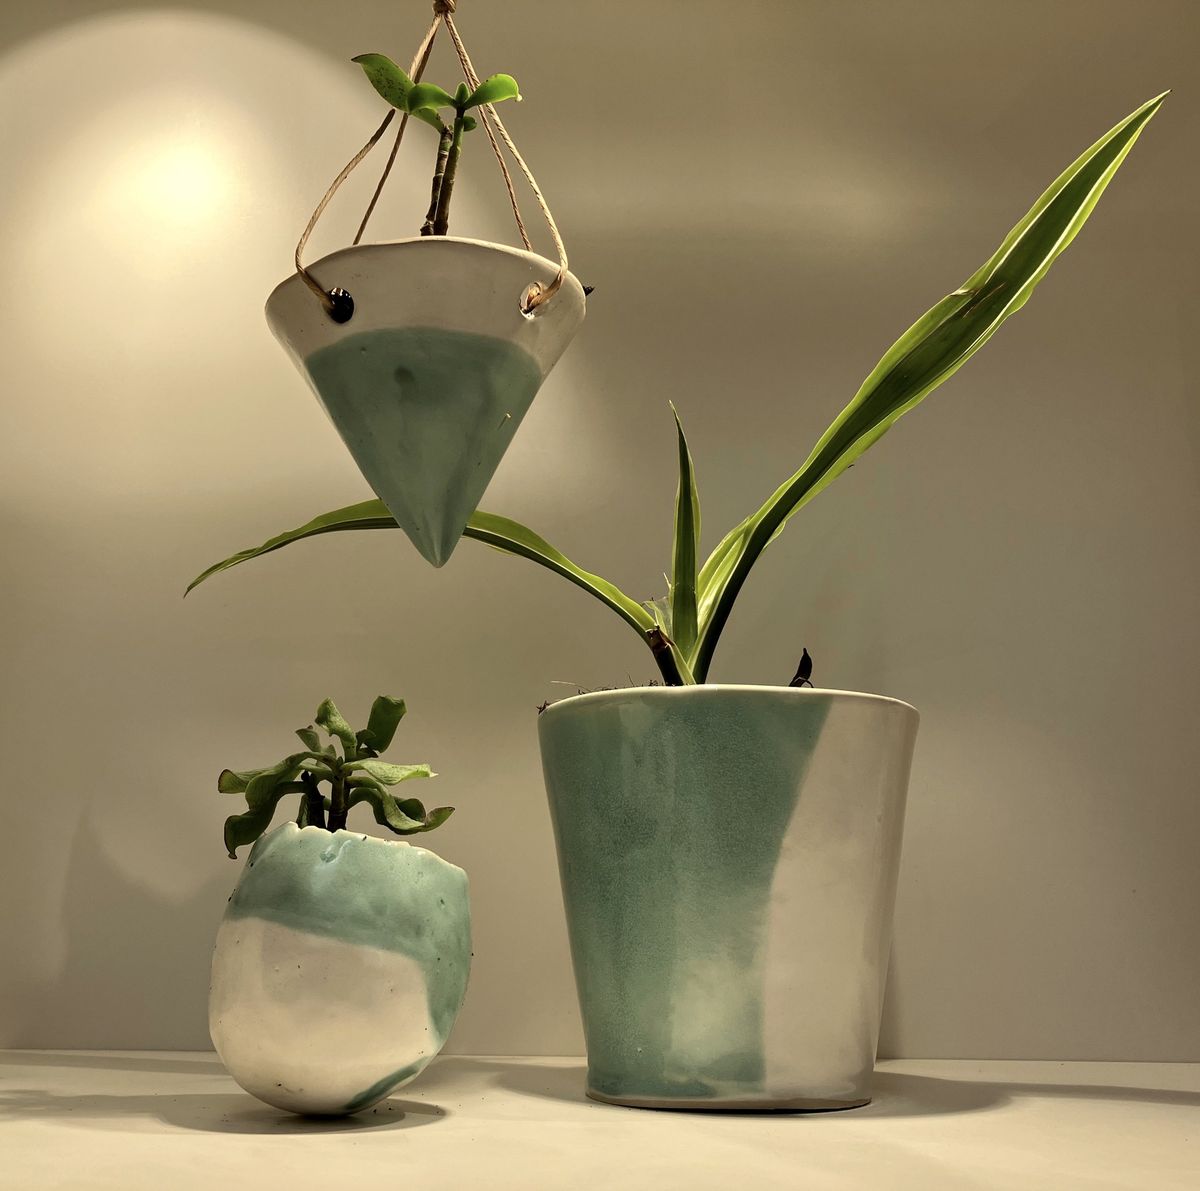 Make a Ceramic Hanging Planter!